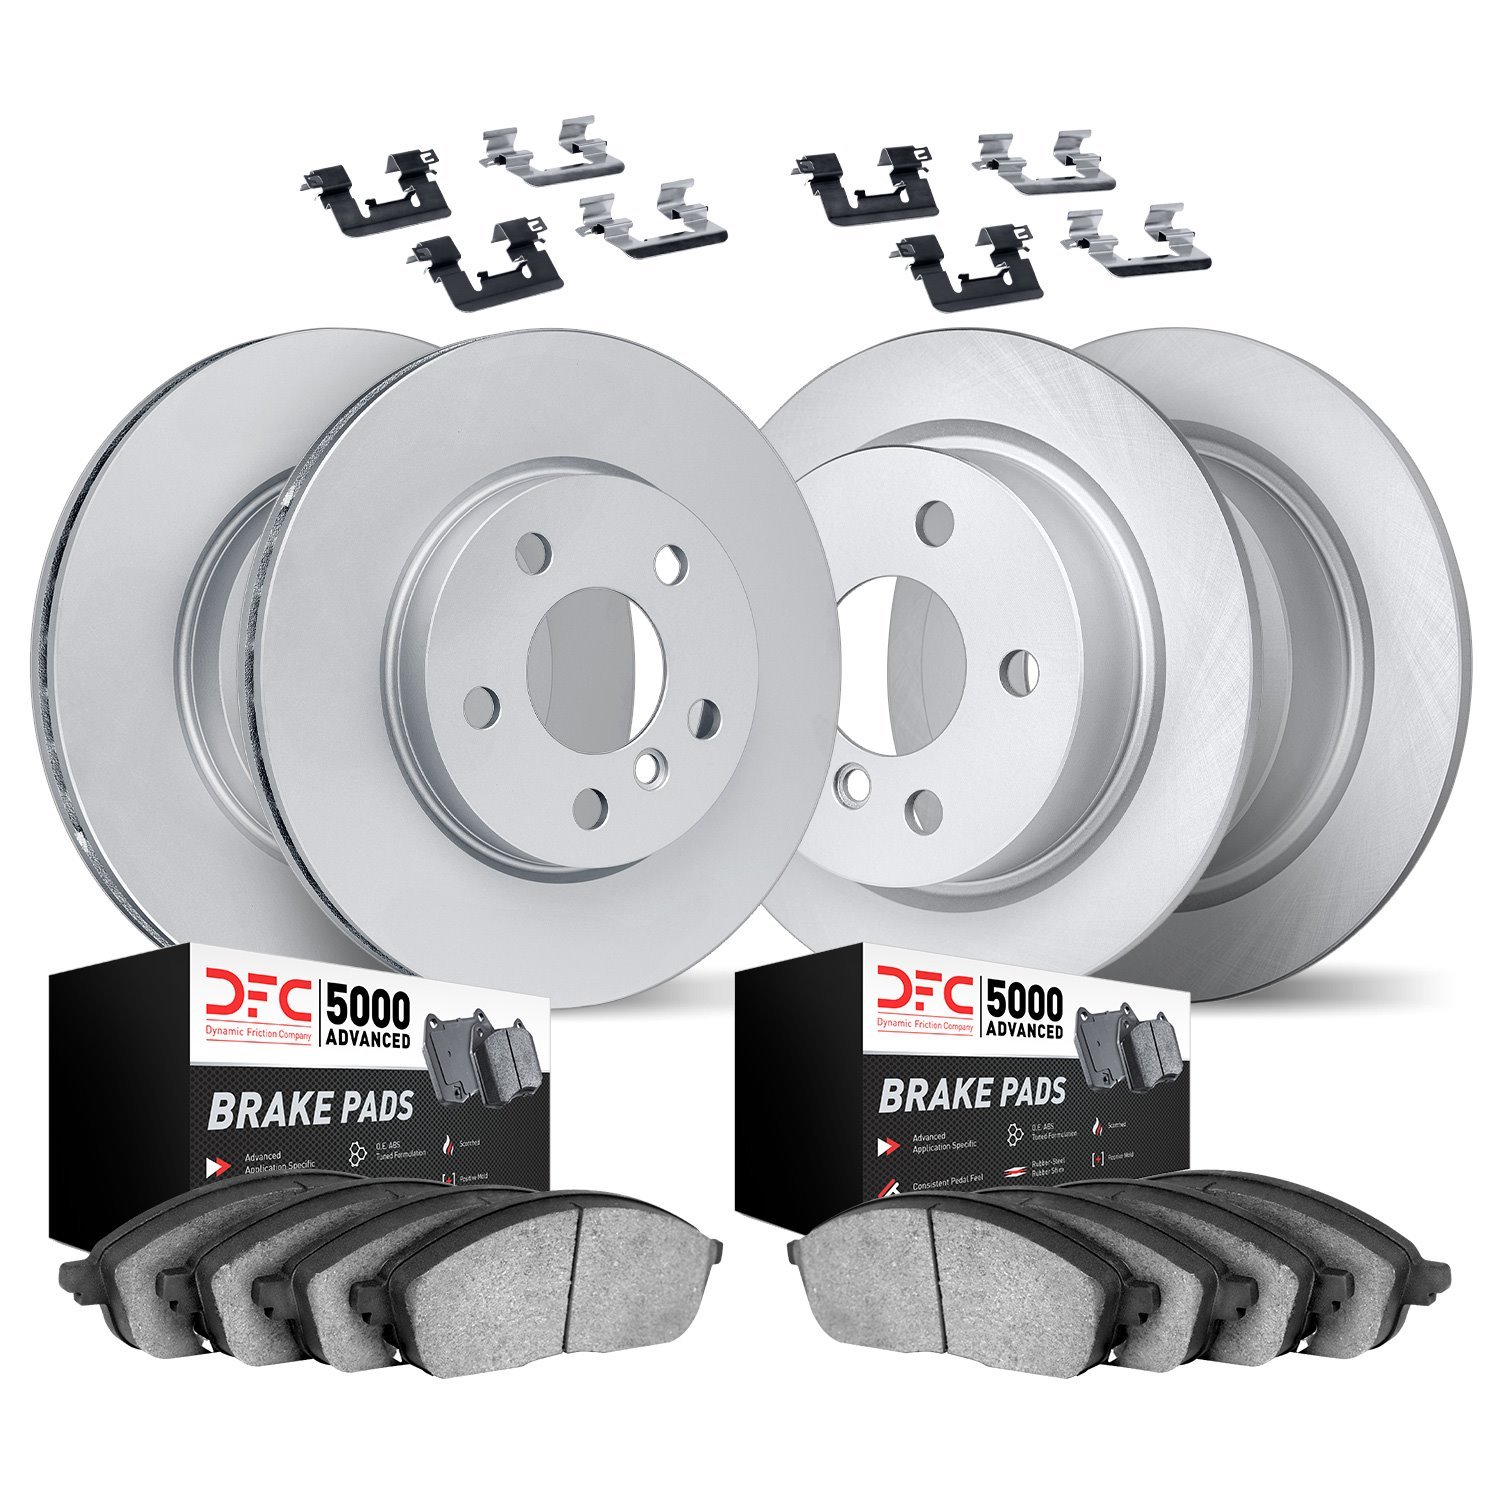 9514-32031 GEOMET Brake Rotors w/5000 Advanced Brake Pads Kit & Hardware, Fits Select Mini, Position: Front and Rear